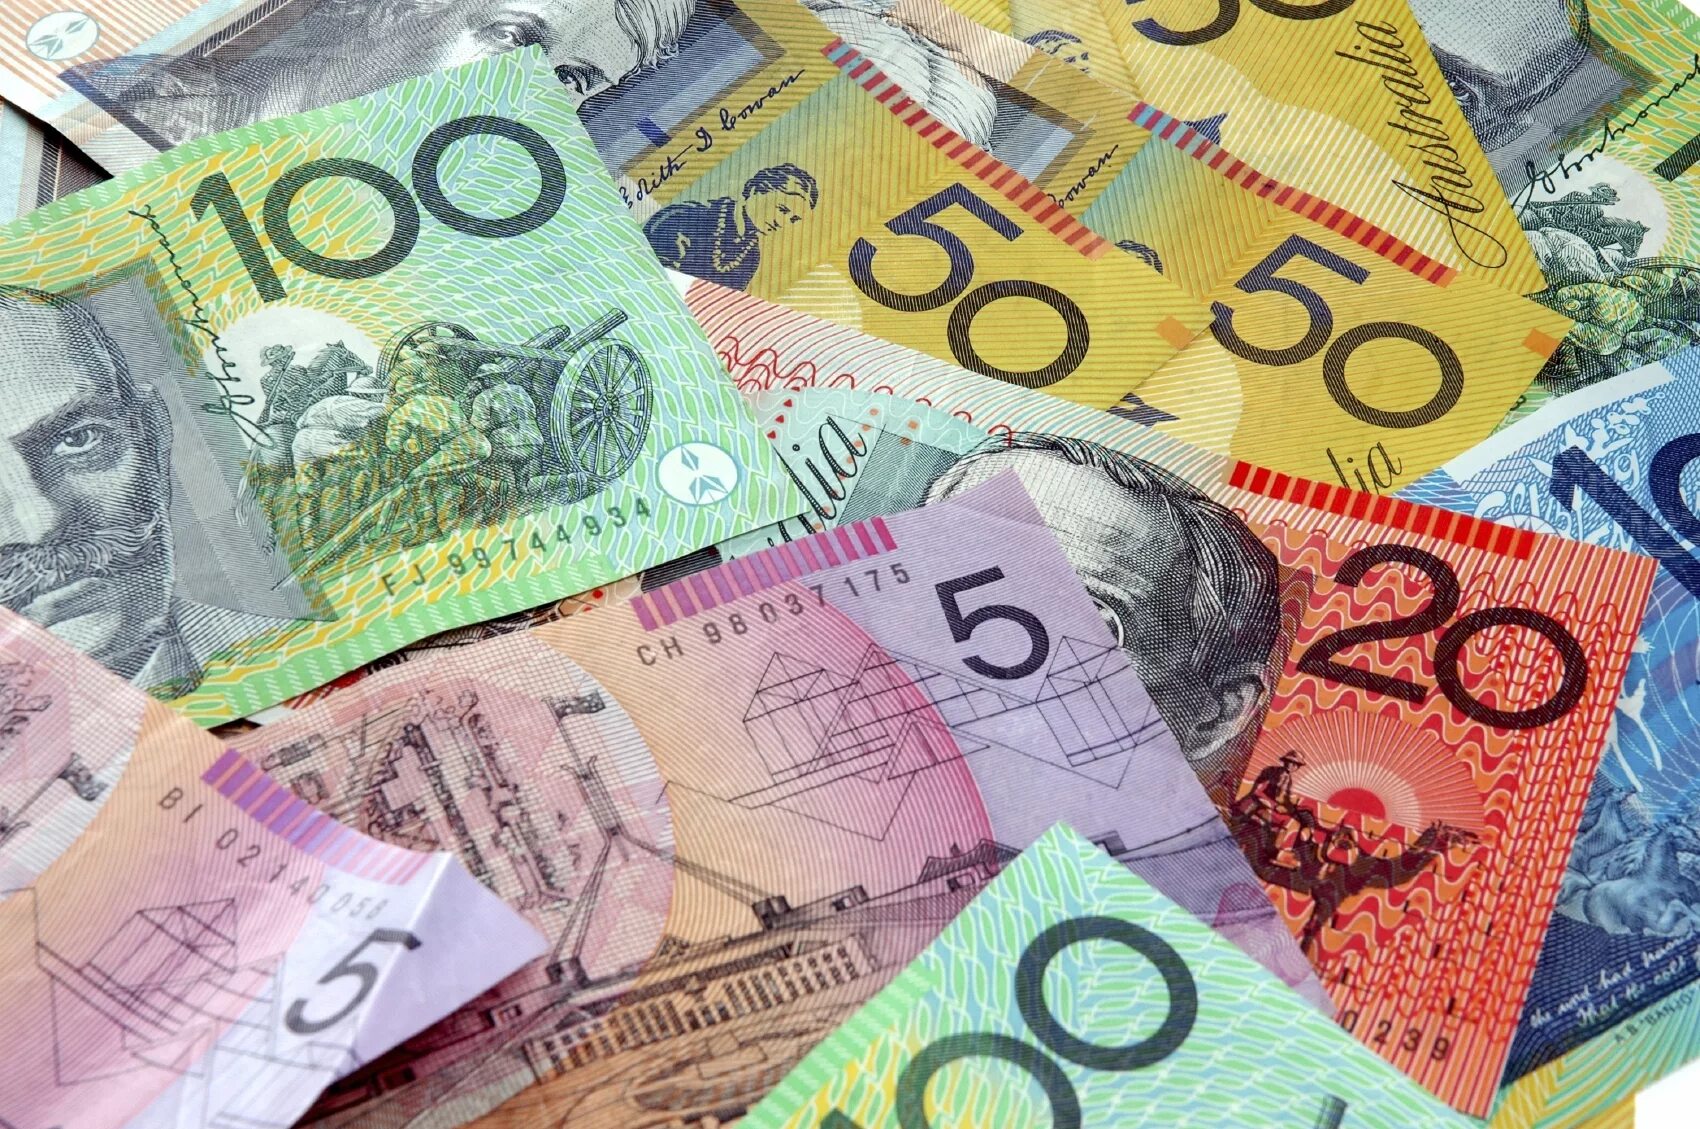 Австралийский доллар. Деньги Австралии. Деньги Австралии купюры. Австралийский доллар (AUD). Австралийская валюта